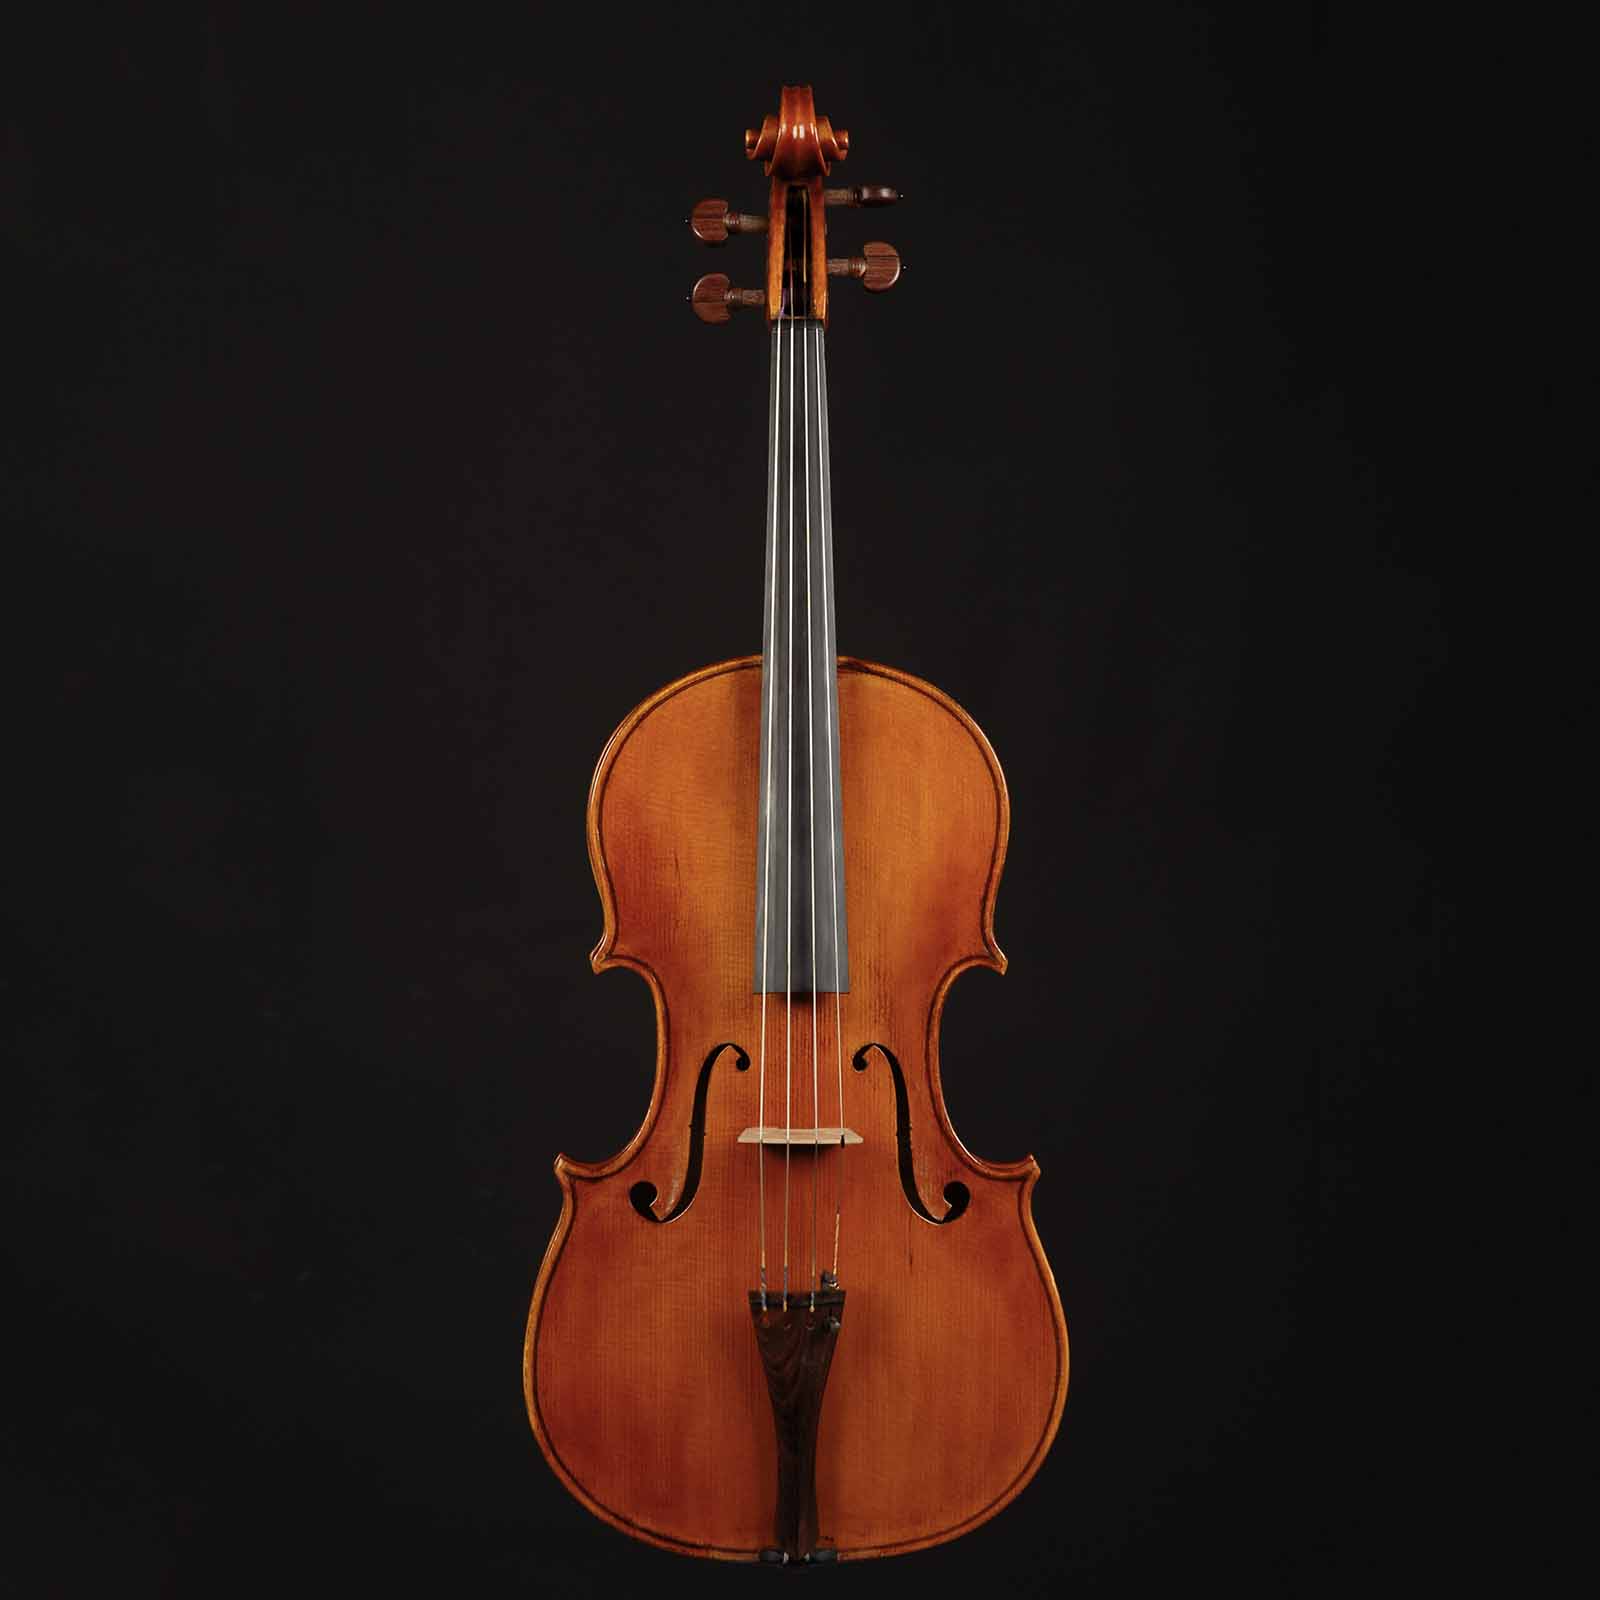 Antonio Stradivari Cremona 1672 “Anemone“ cm 42 - Image 1